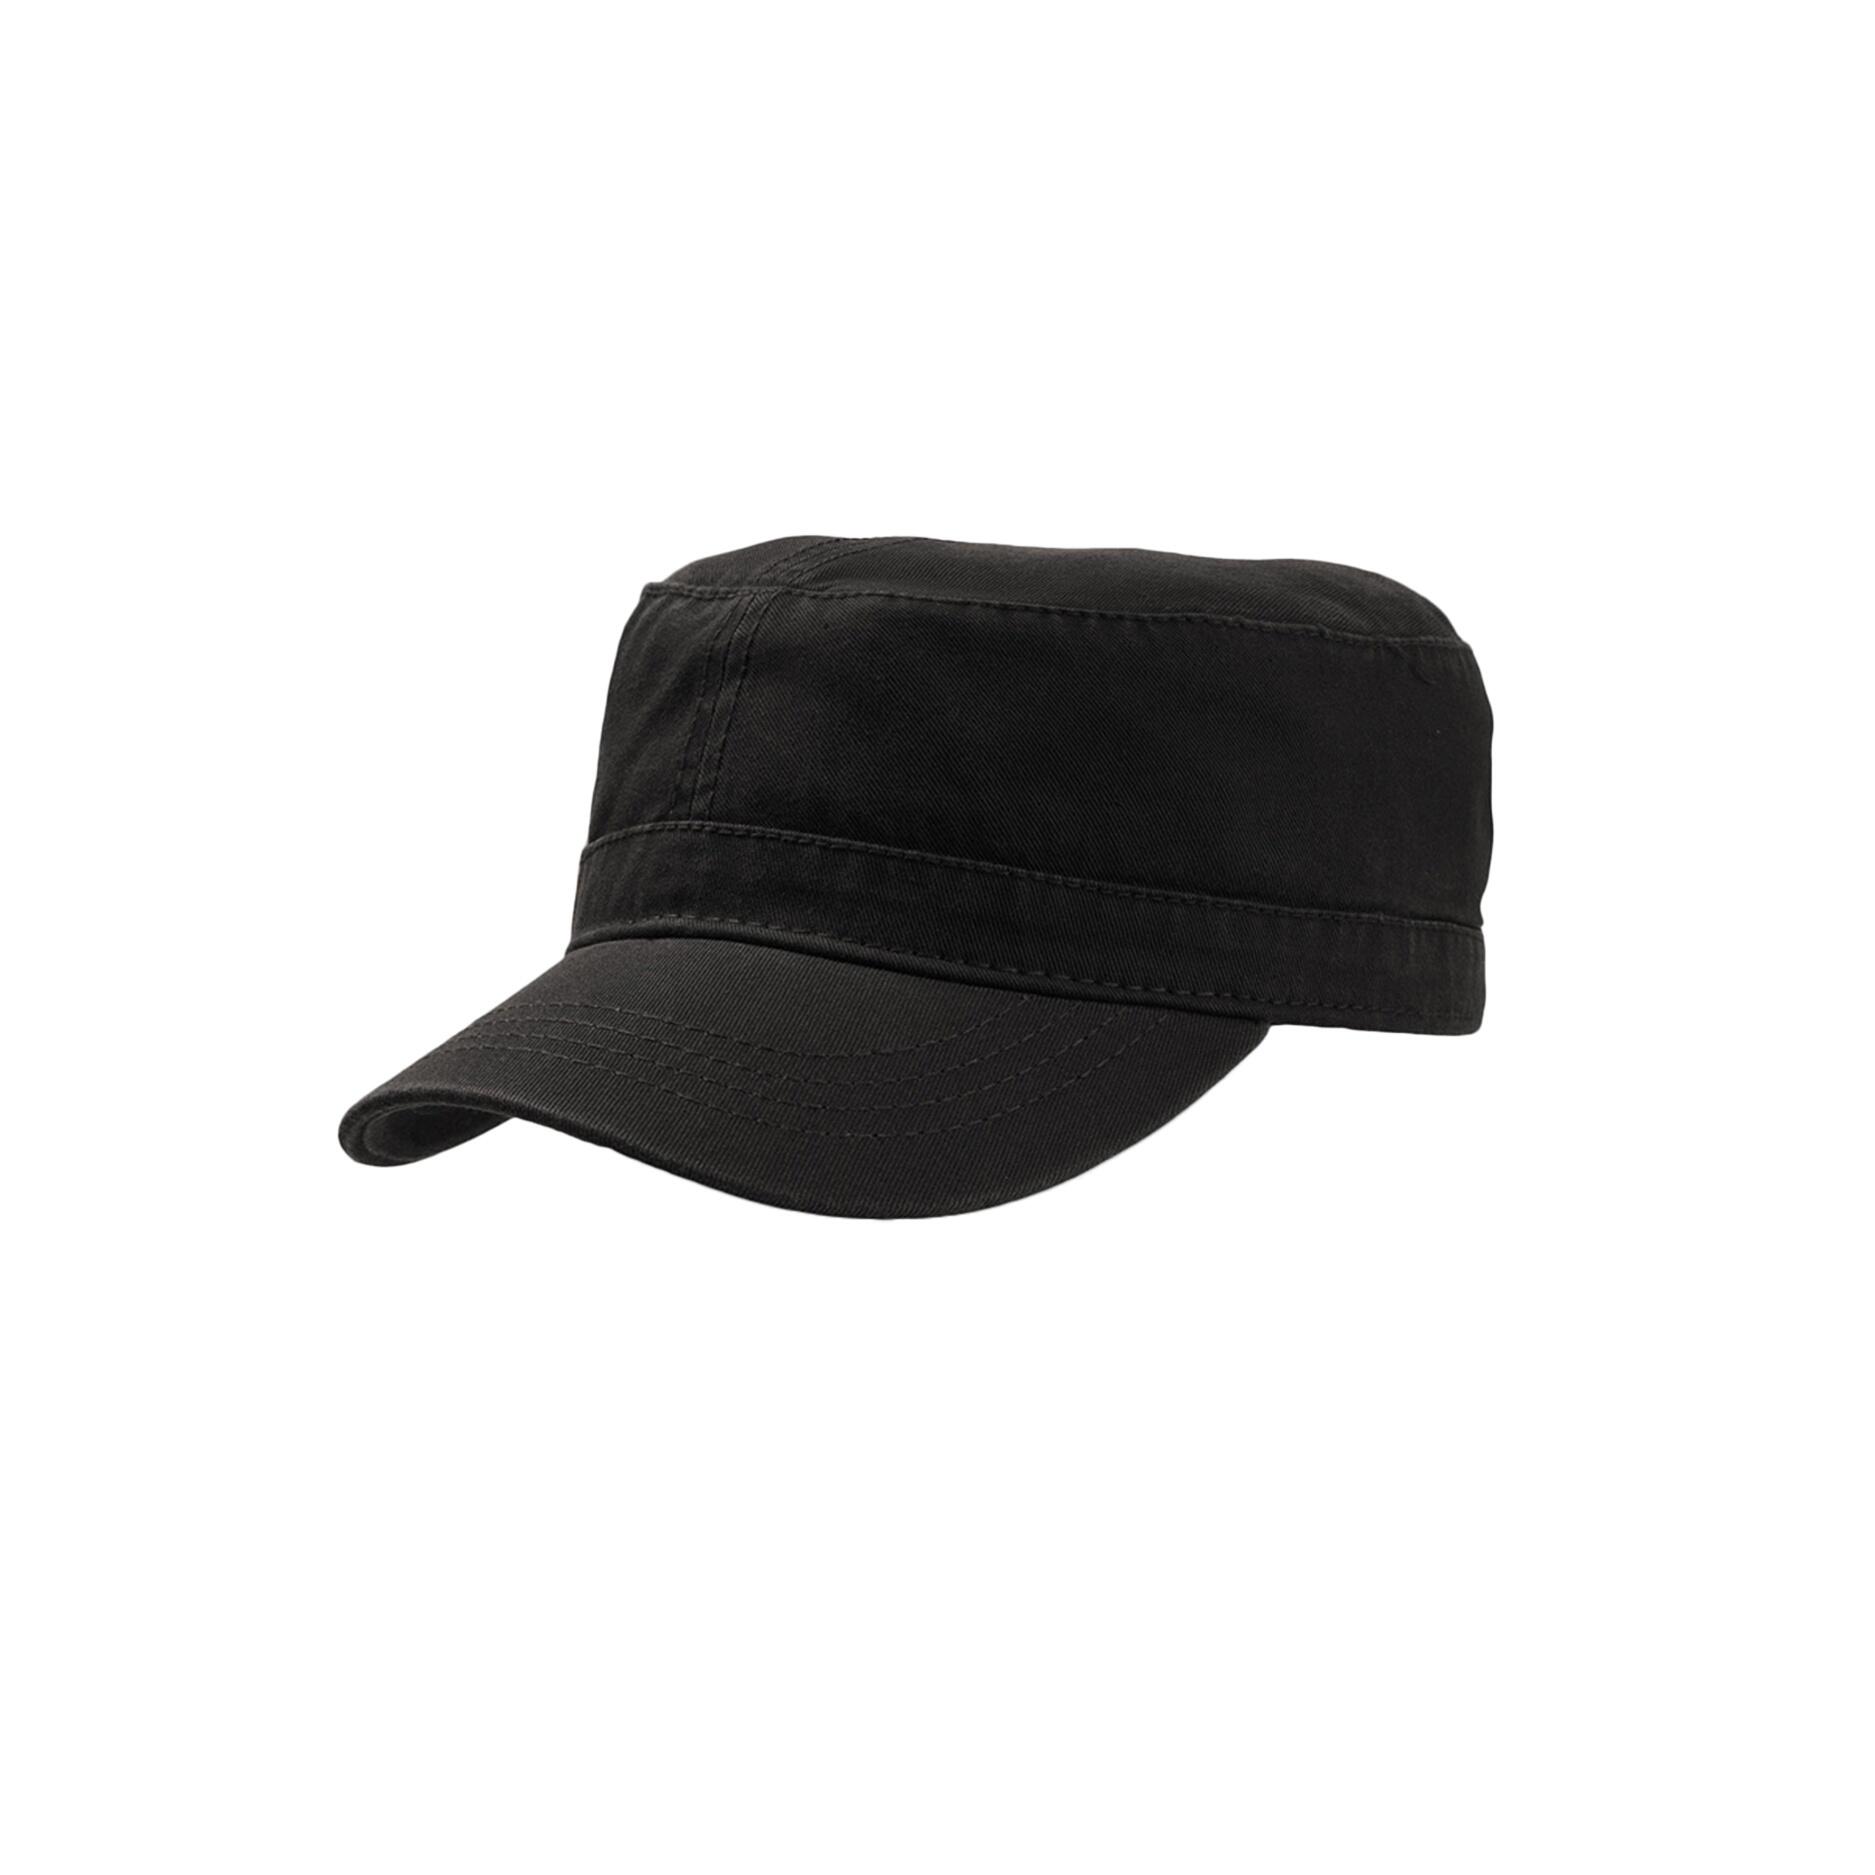 Chino Cotton Uniform Military Cap (Black) 2/5